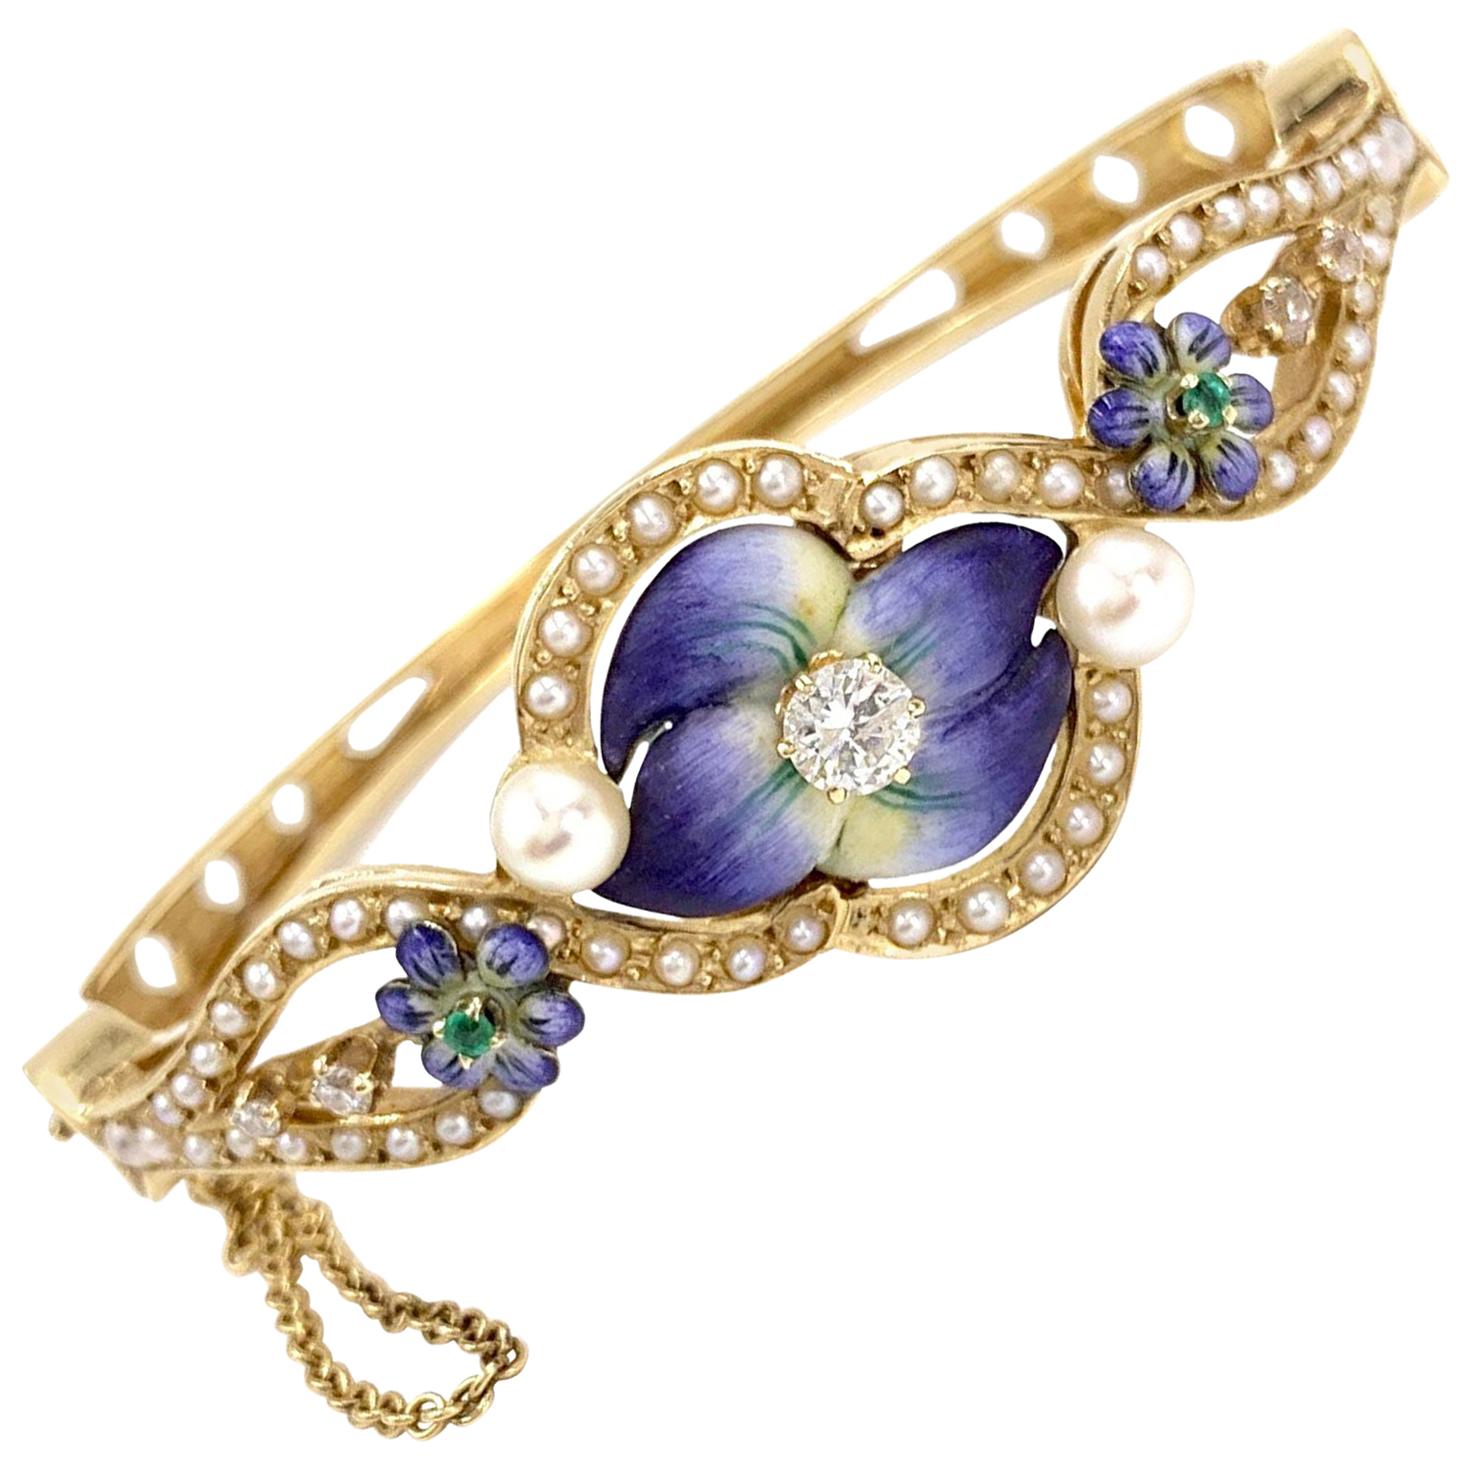 Enamel, Diamond, Pearl and Emerald Floral Bangle Bracelet